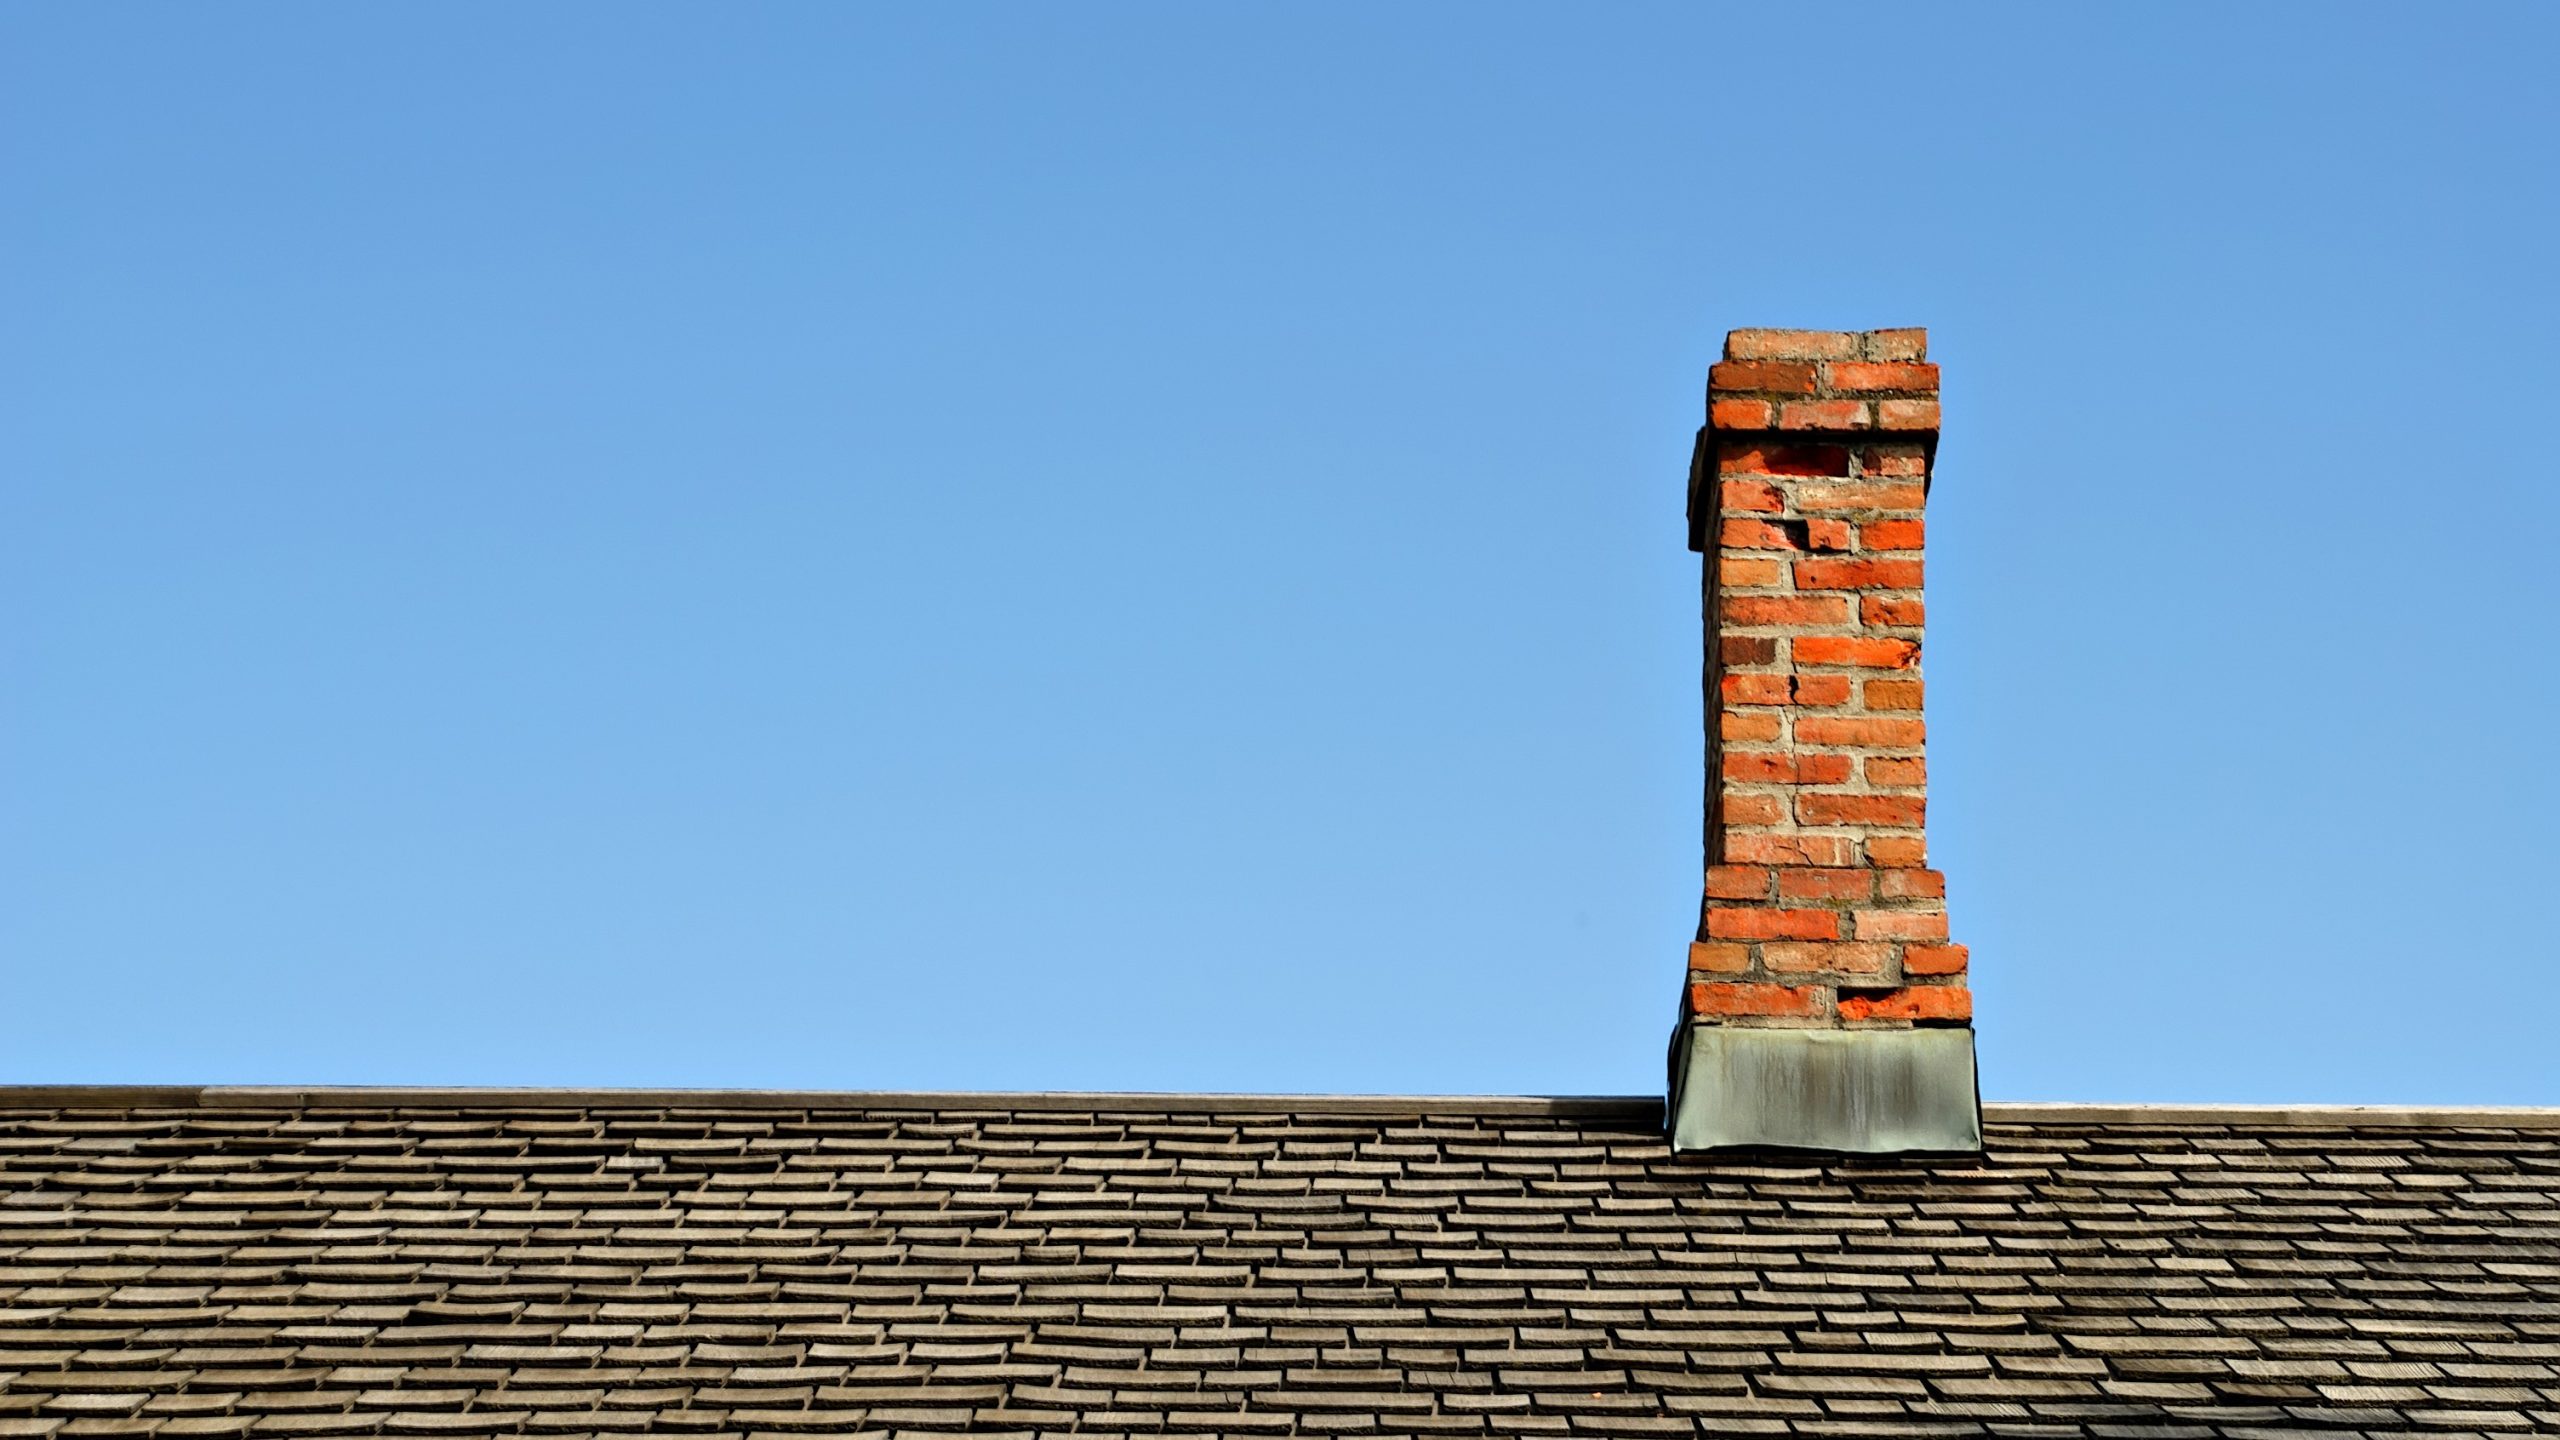 Dark gray asphalt roof with brick chimney of home in Mechanicsburg, PA